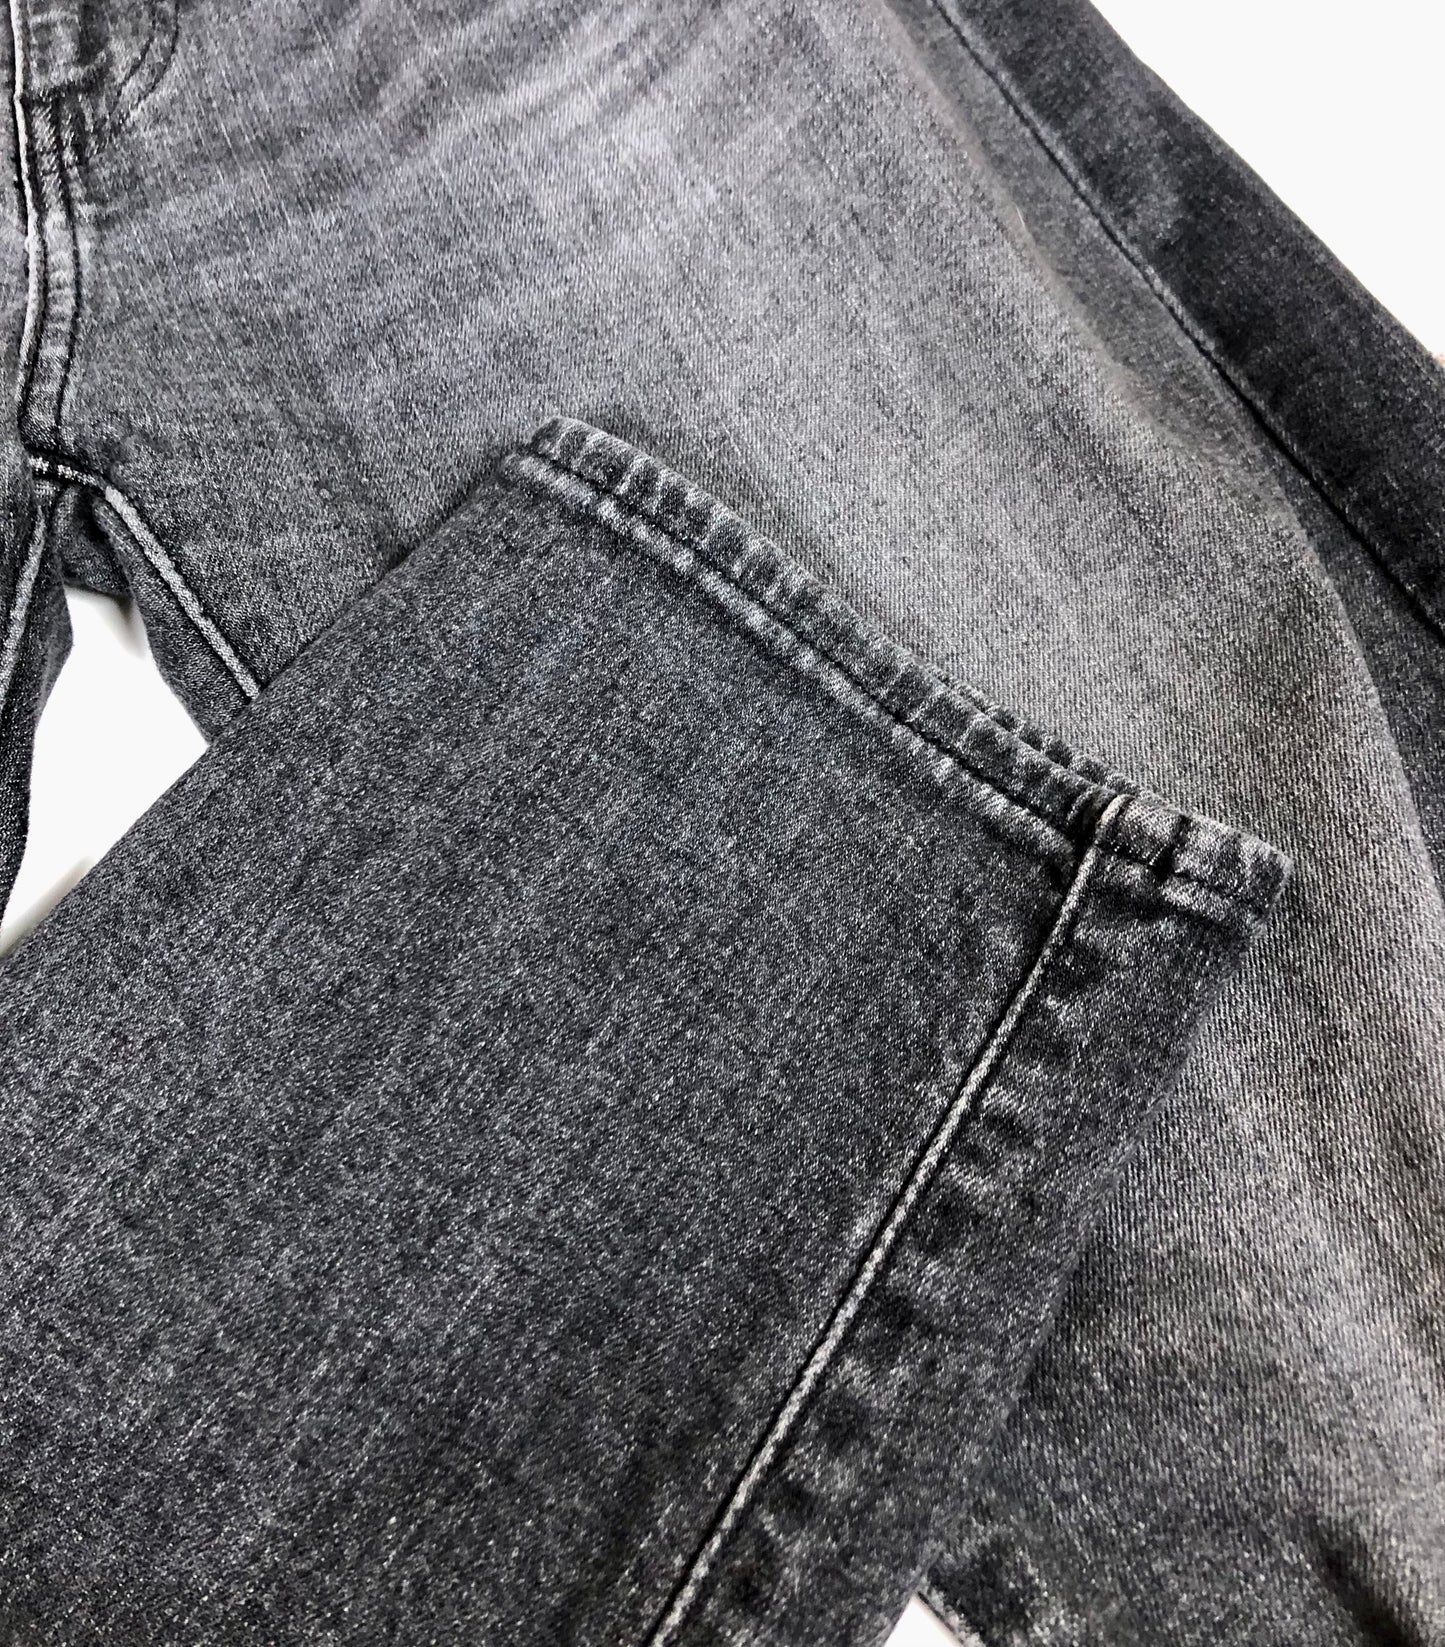 Pantalon jeans color gris oscuro Levis Strauss Talla 34x34 Corte Slim Fit Stretch